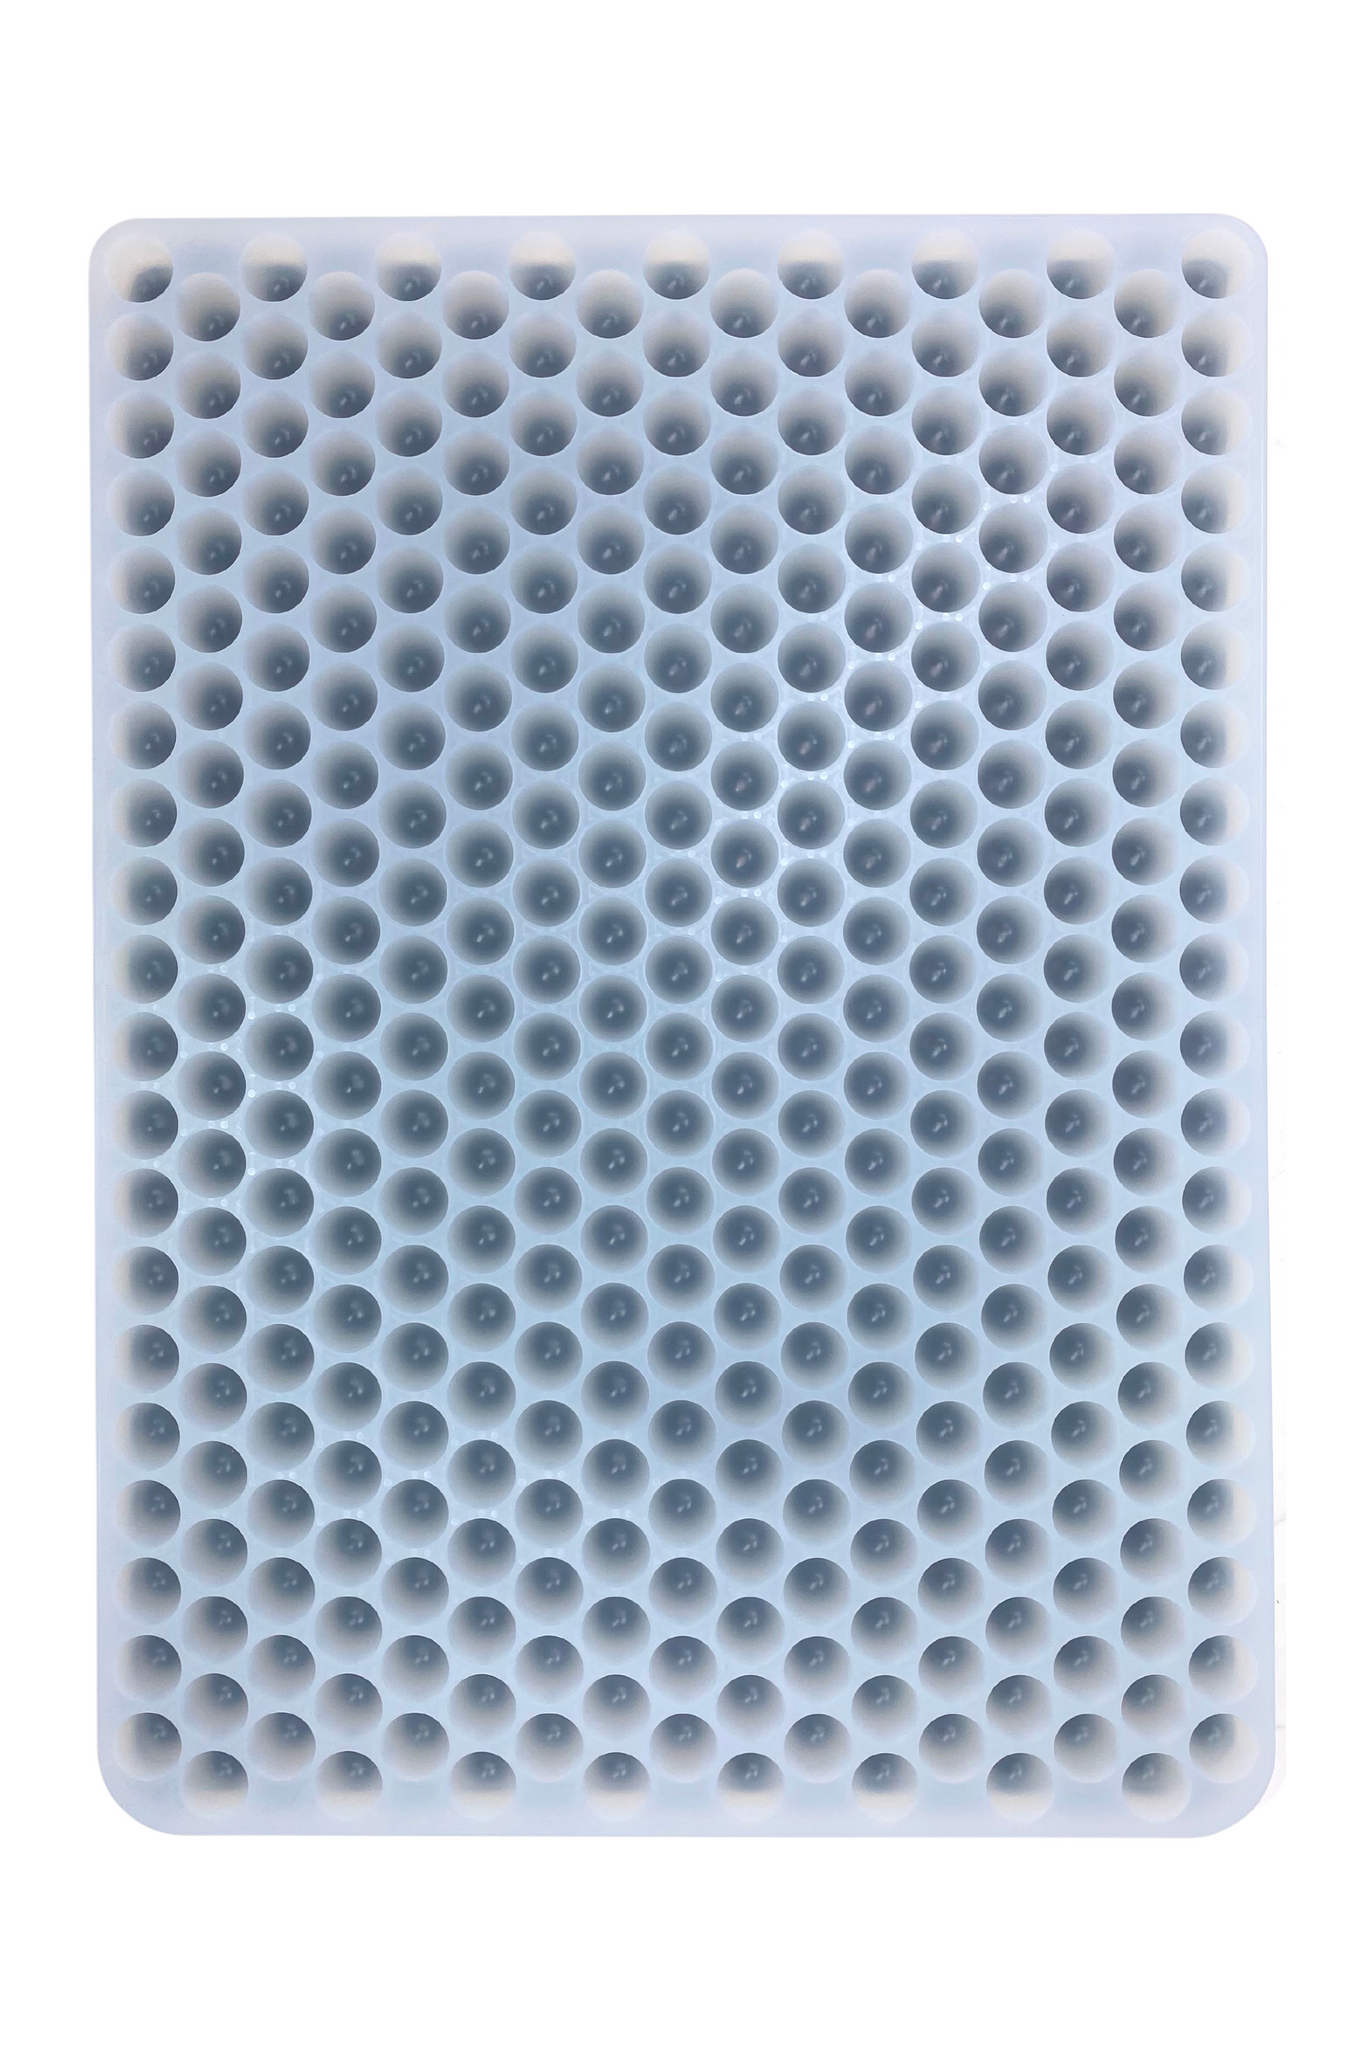 2 mL Square/Cube Gummy Mold - Half Sheet - 490 cavity